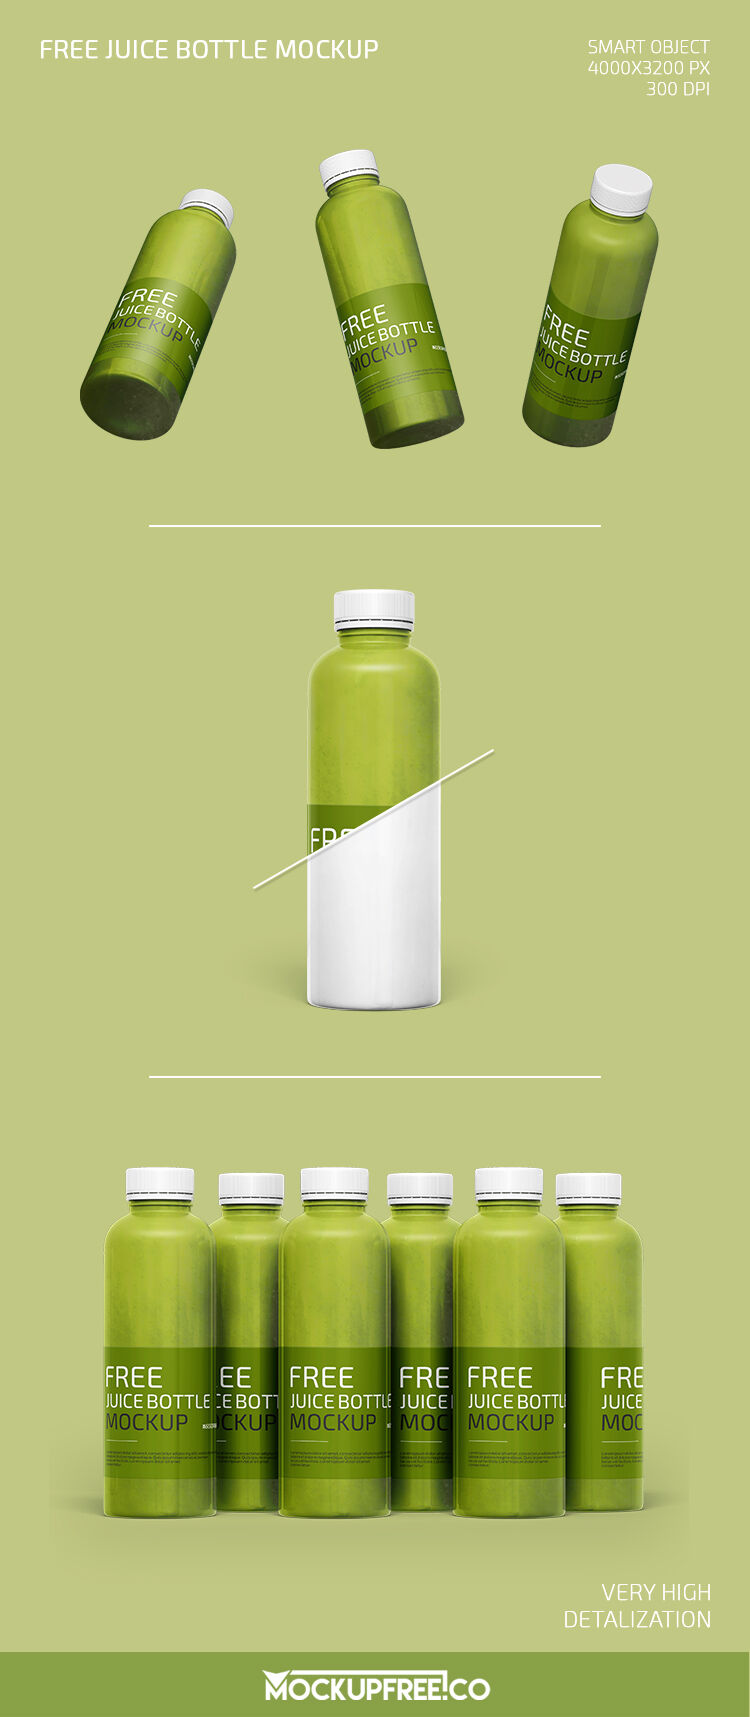 Free apple juice bottle mockup - Smarty Mockups